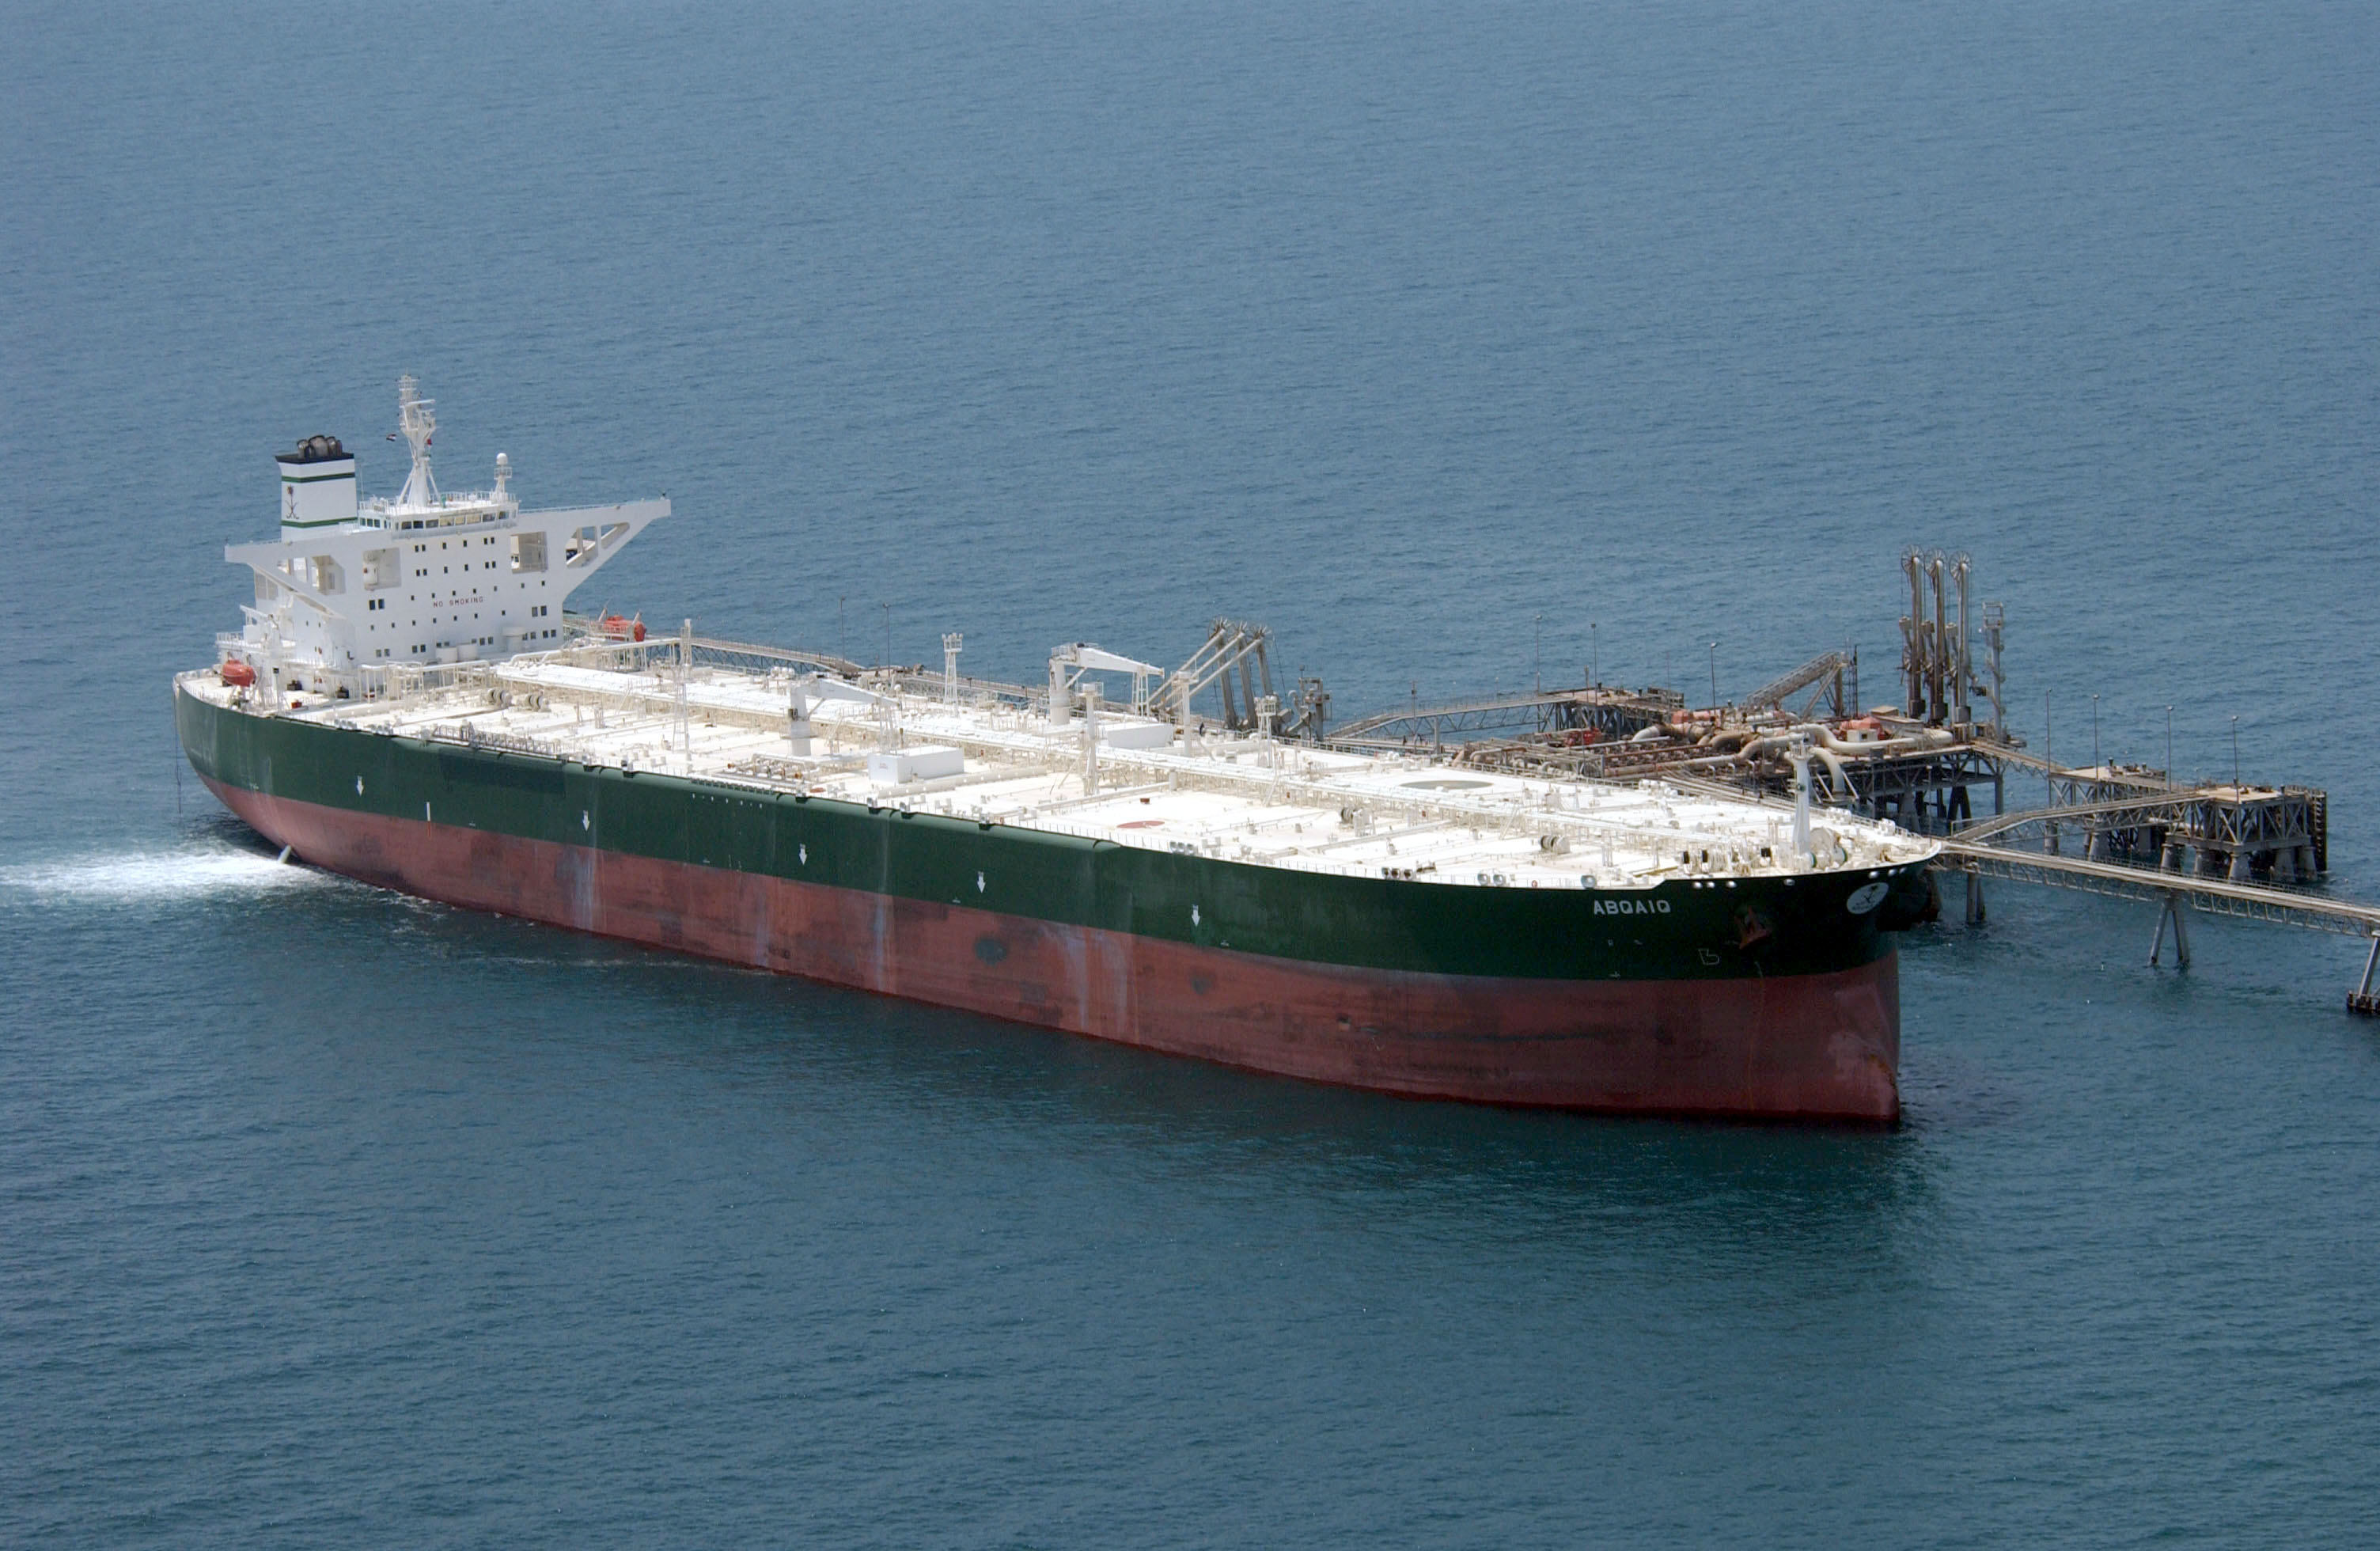 MT Abqaiq crude oil carrier